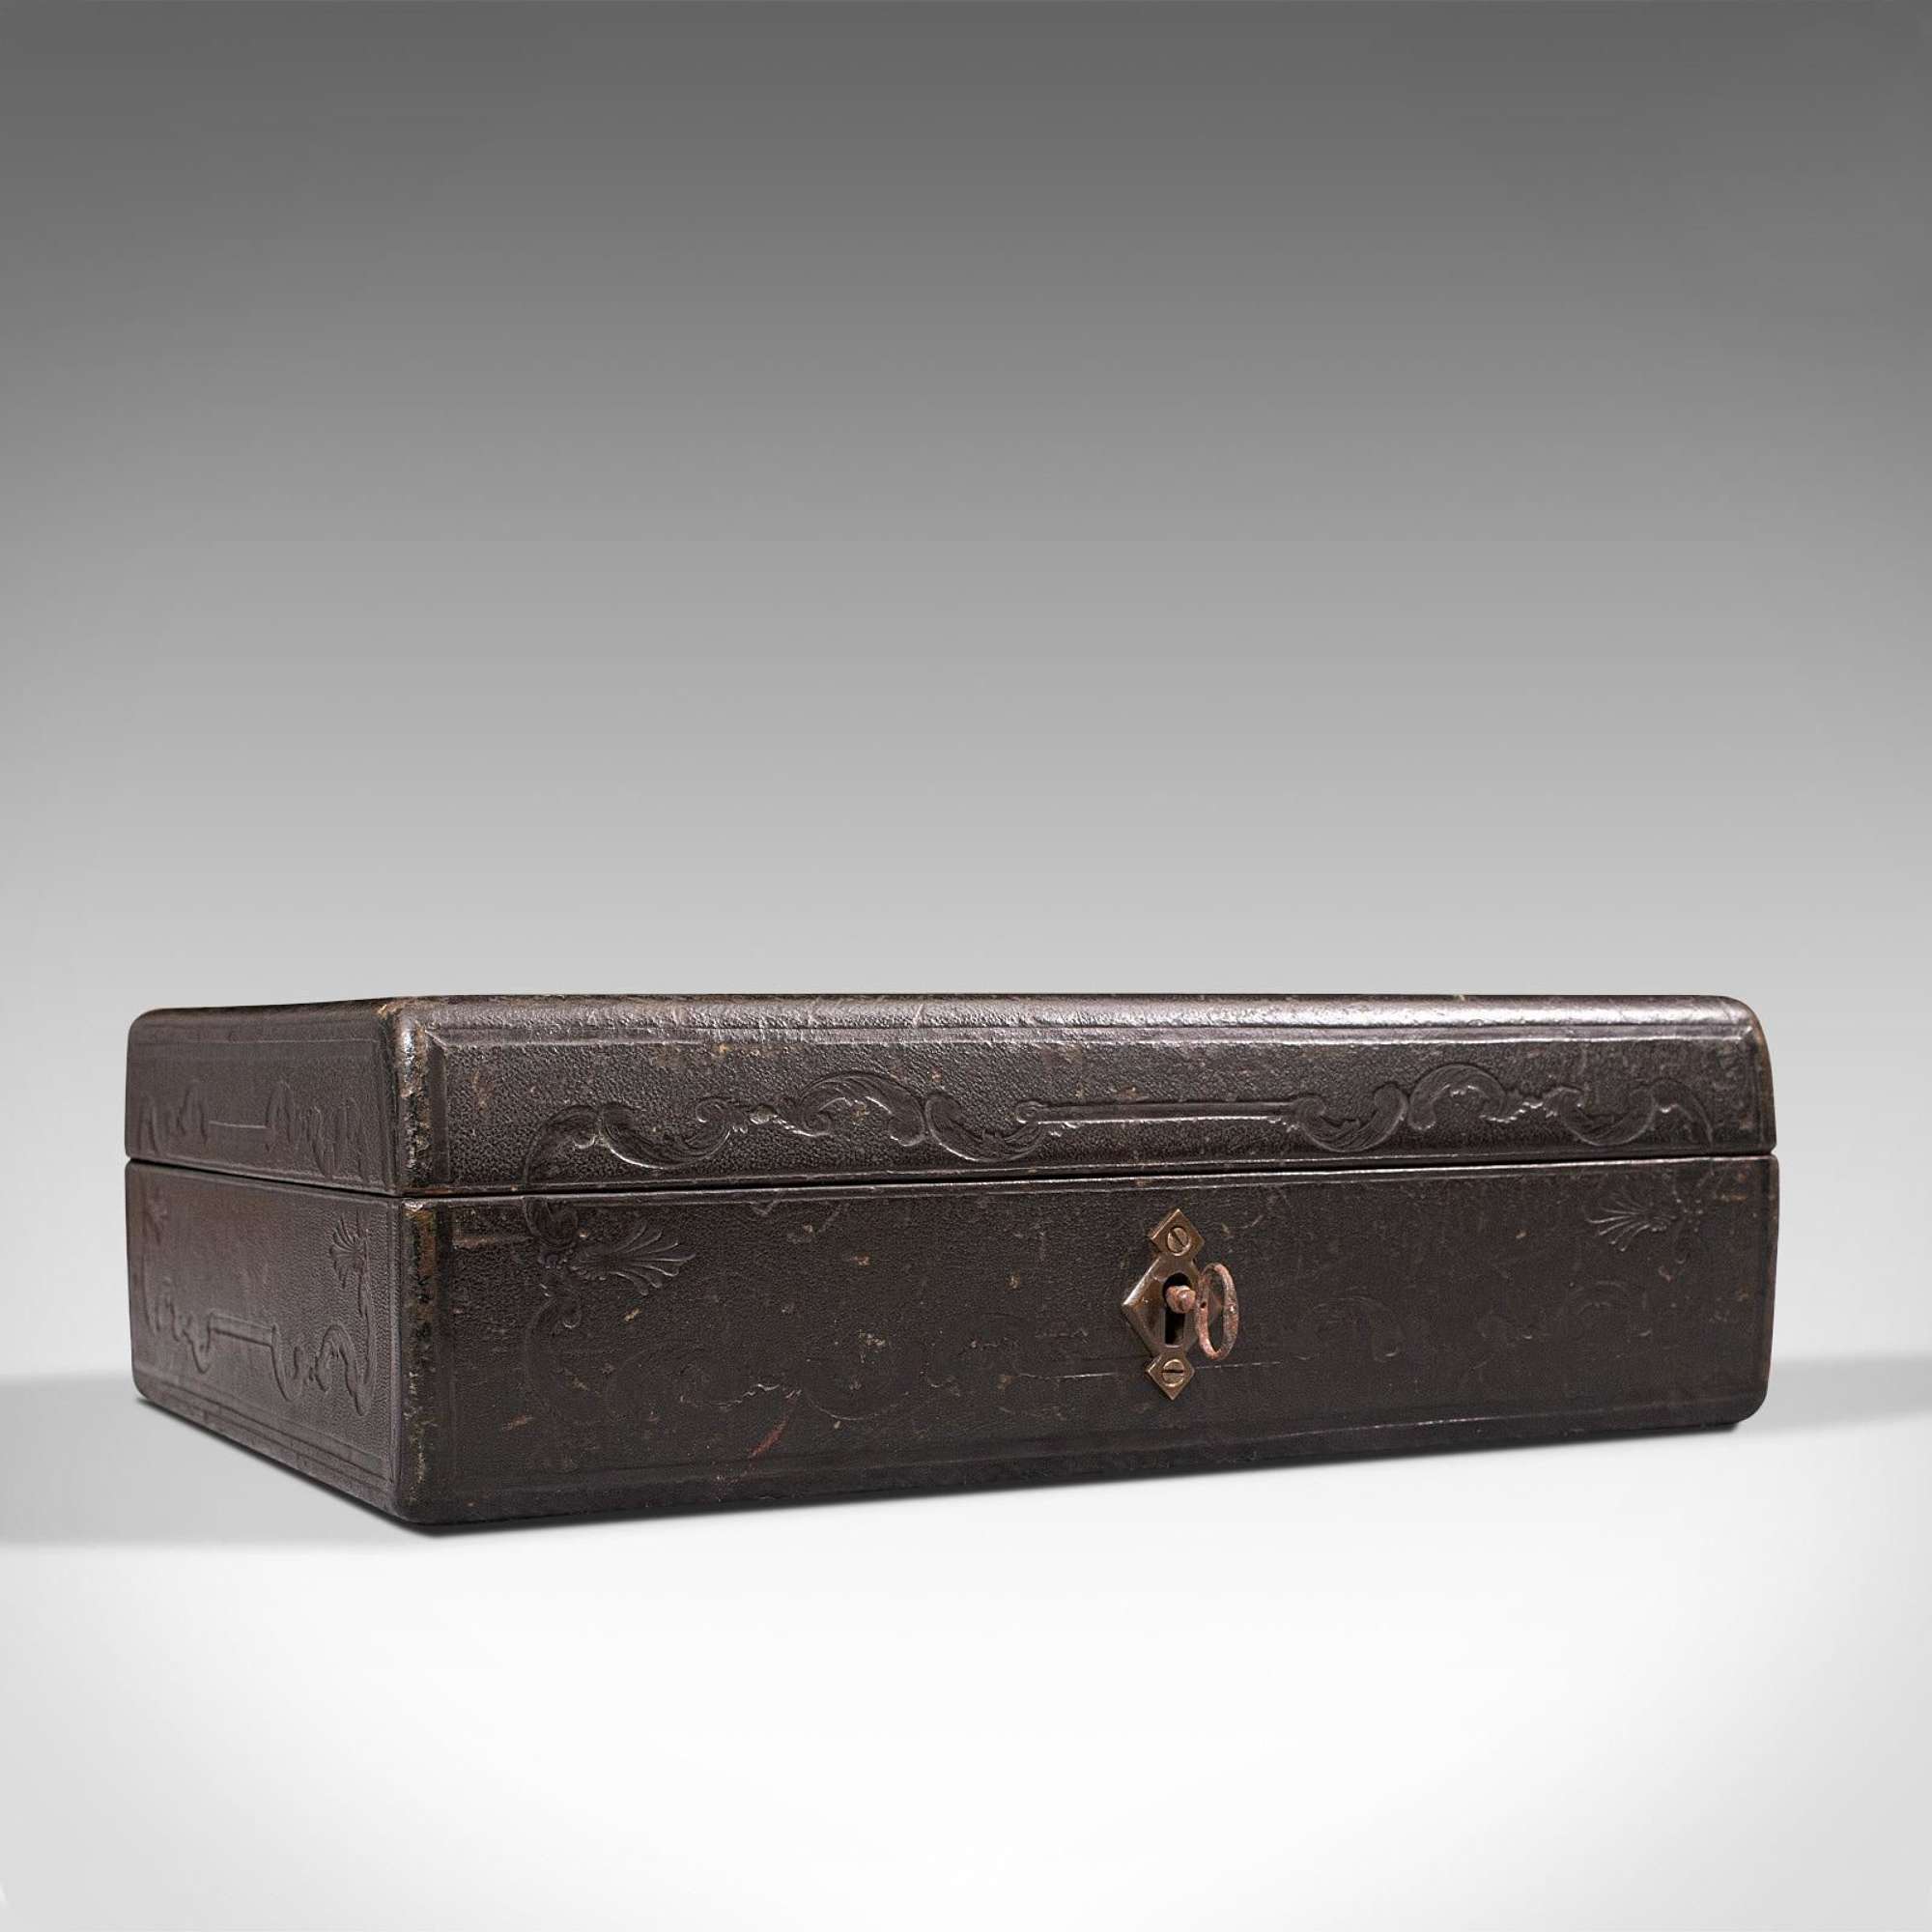 Antique Merchant's Writing Slope, English, Leather, Correspondence Box C.1890